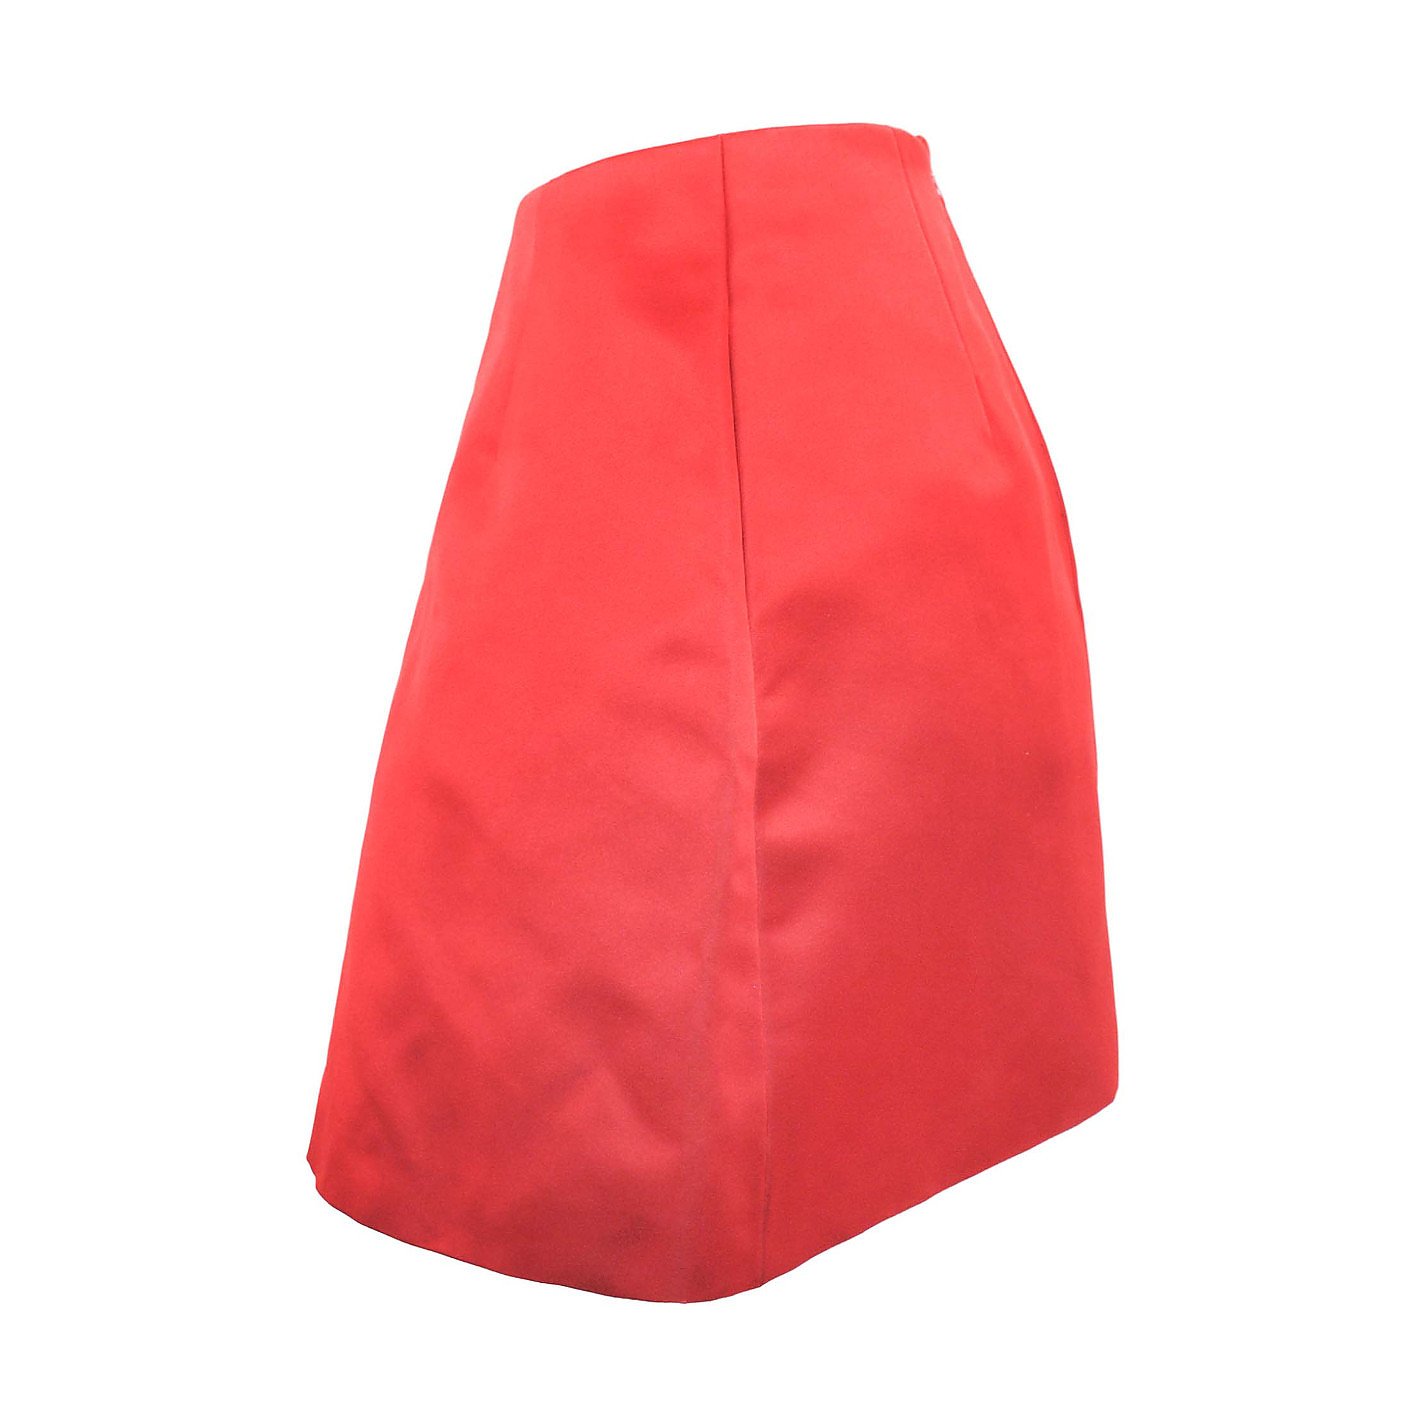 Carven A-Line Box Pleat Satin Mini Skirt